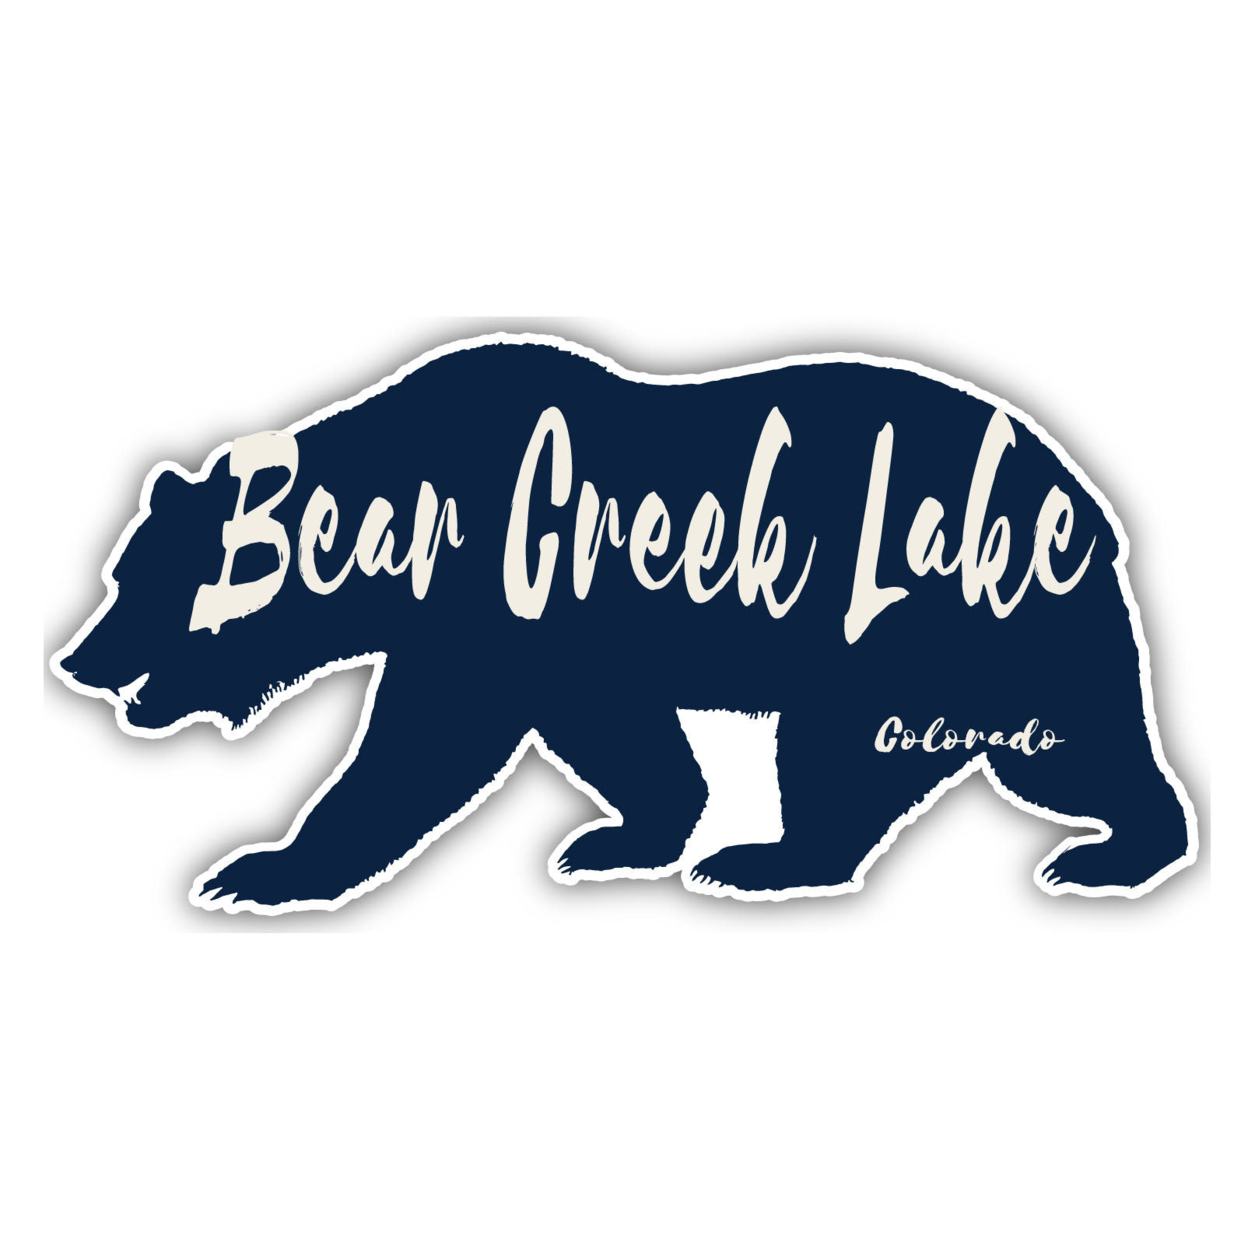 Bear Creek Lake Colorado Souvenir Decorative Stickers (Choose Theme And Size) - 4-Pack, 10-Inch, Bear